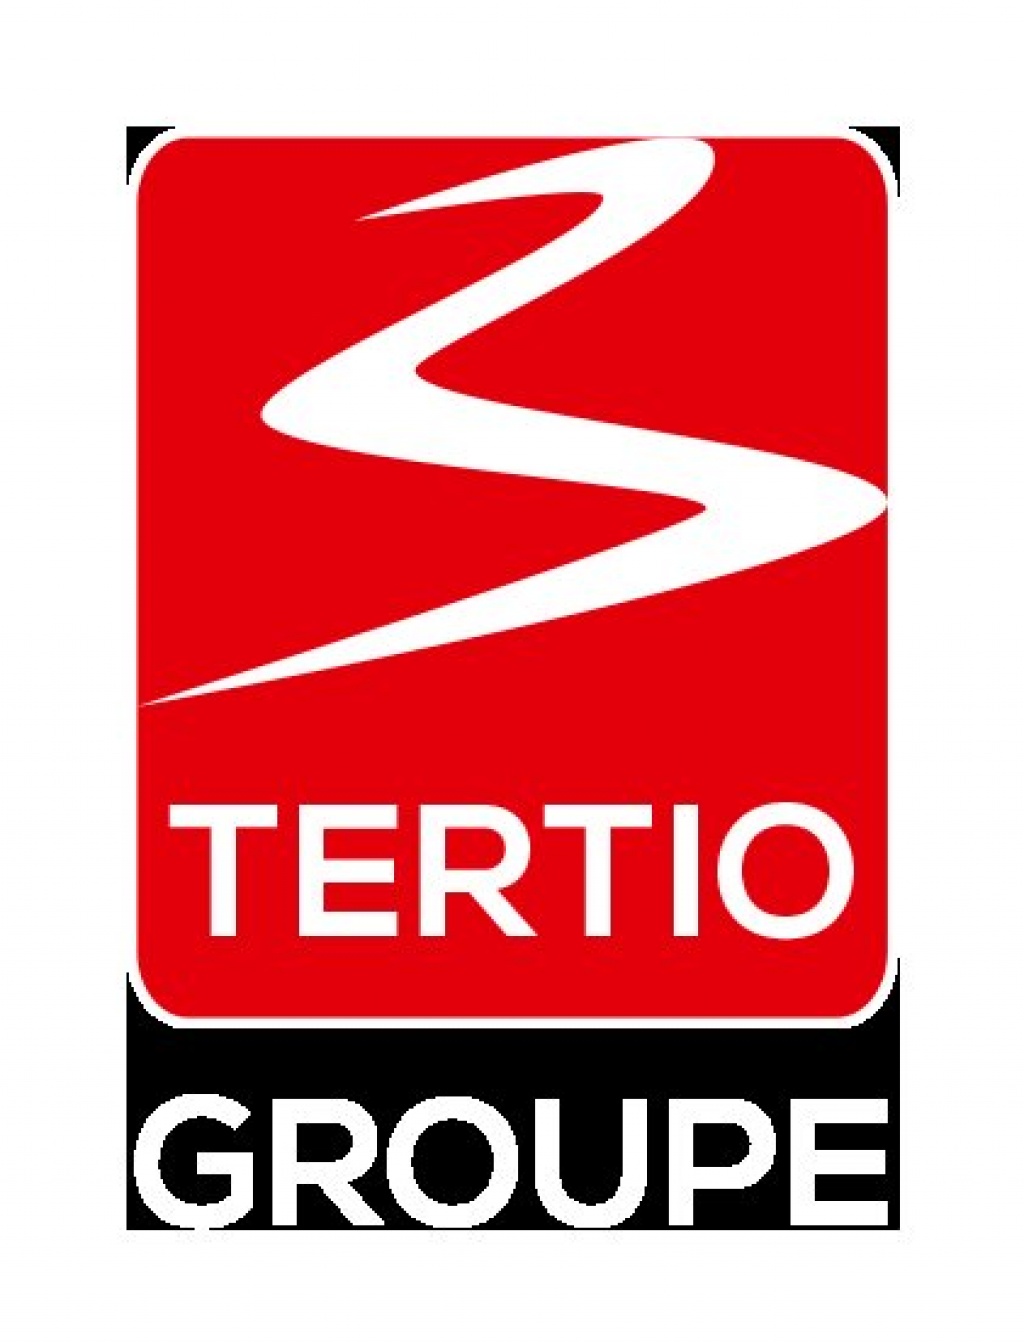 Le groupe TERTIO recrute un chargé de promo radios h/f !